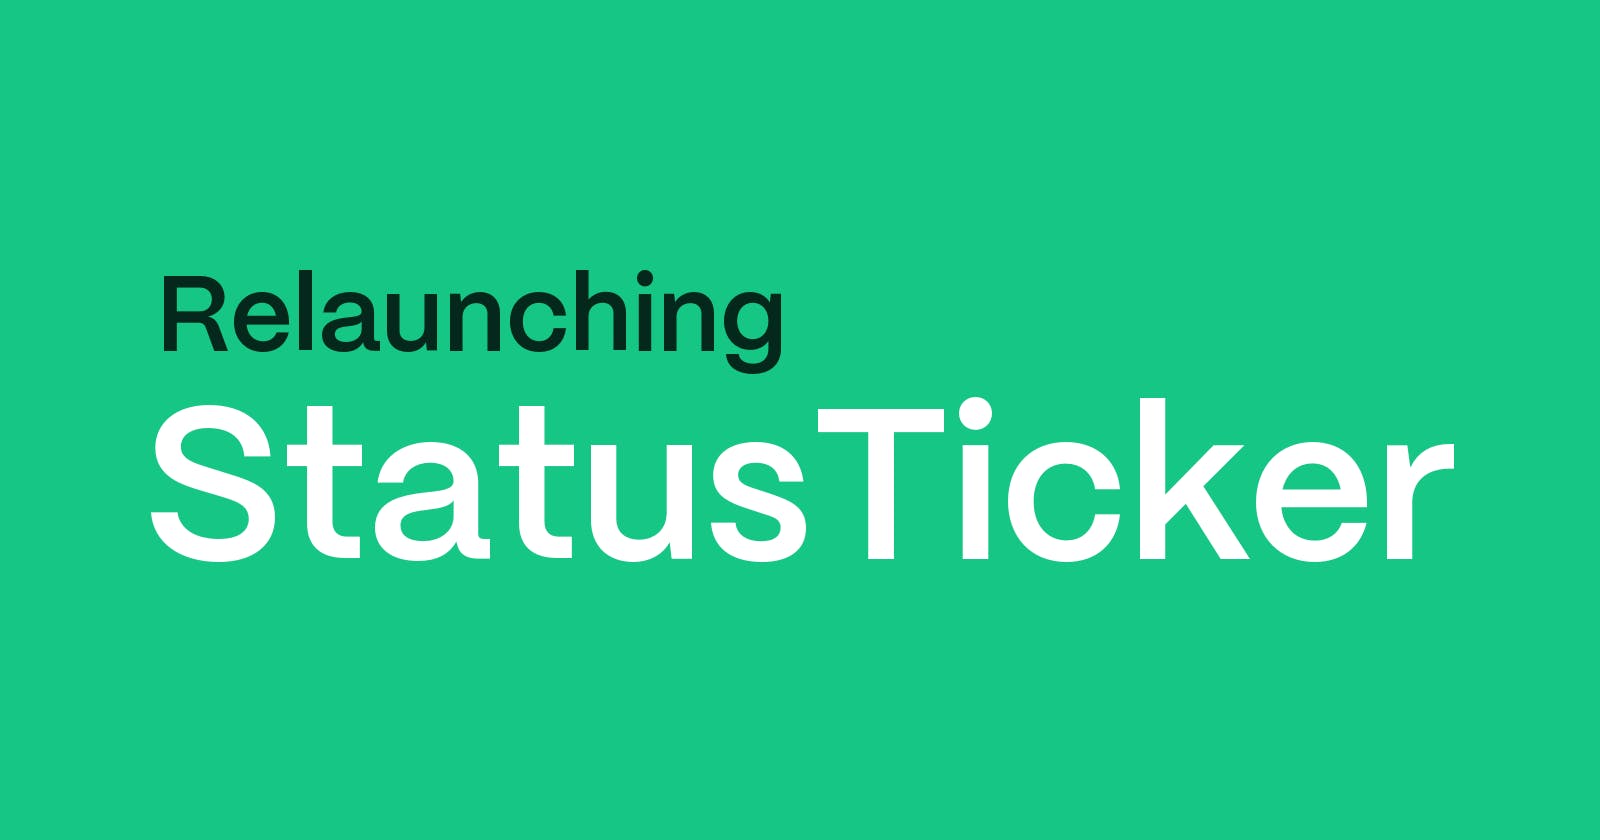 Re-launching StatusTicker